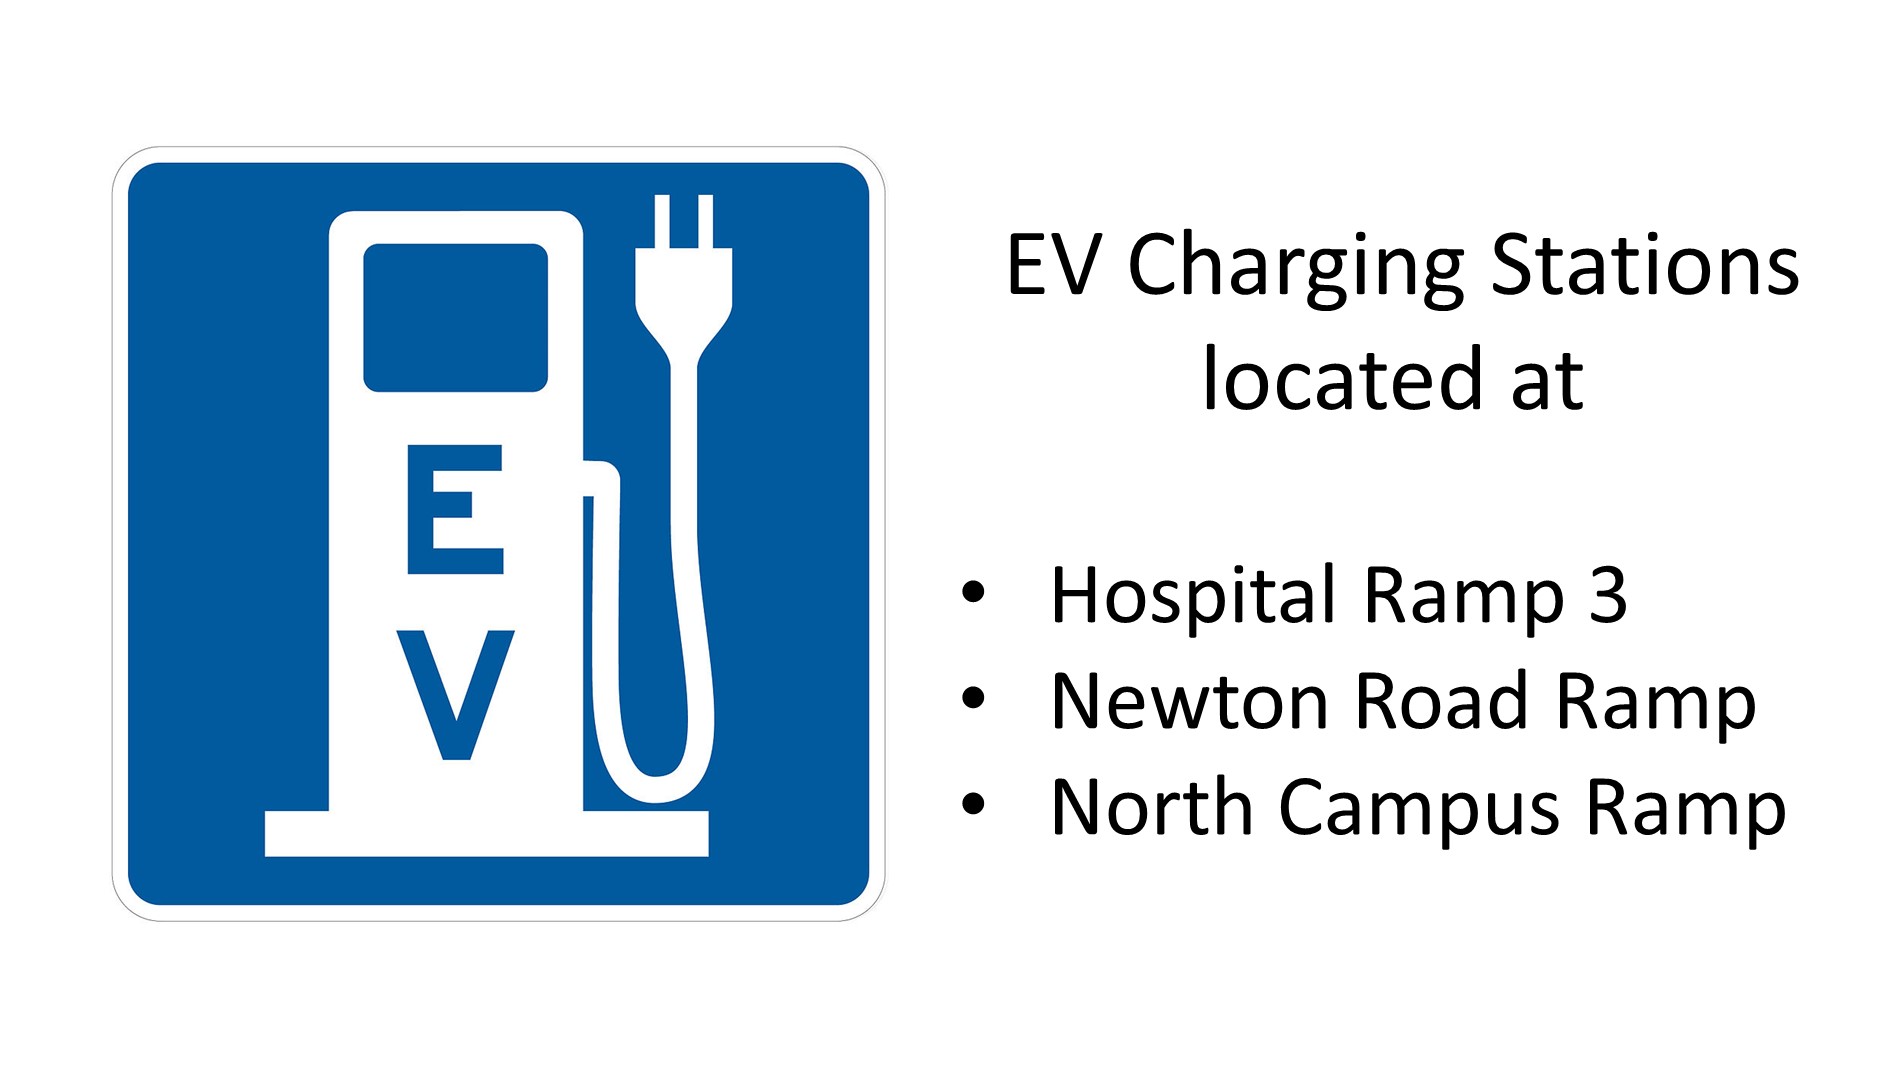 EV Charging stations at Ramp 3, Newton road ramp and North campus ramp